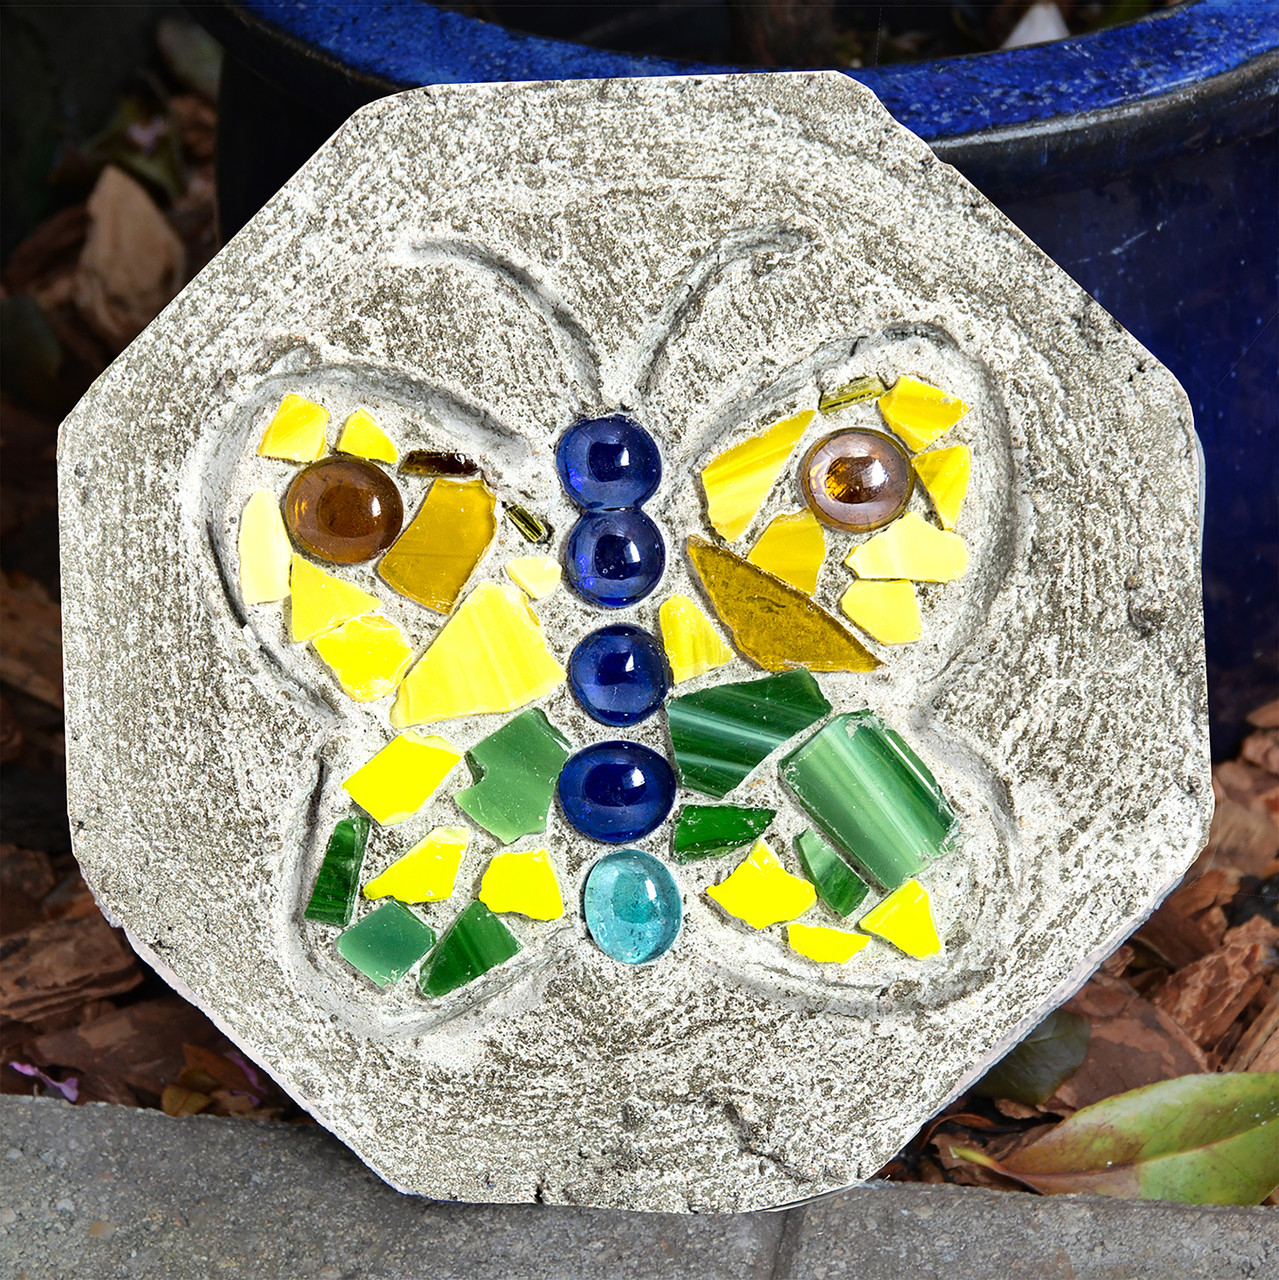 Mosaic Stepping Stone Kit